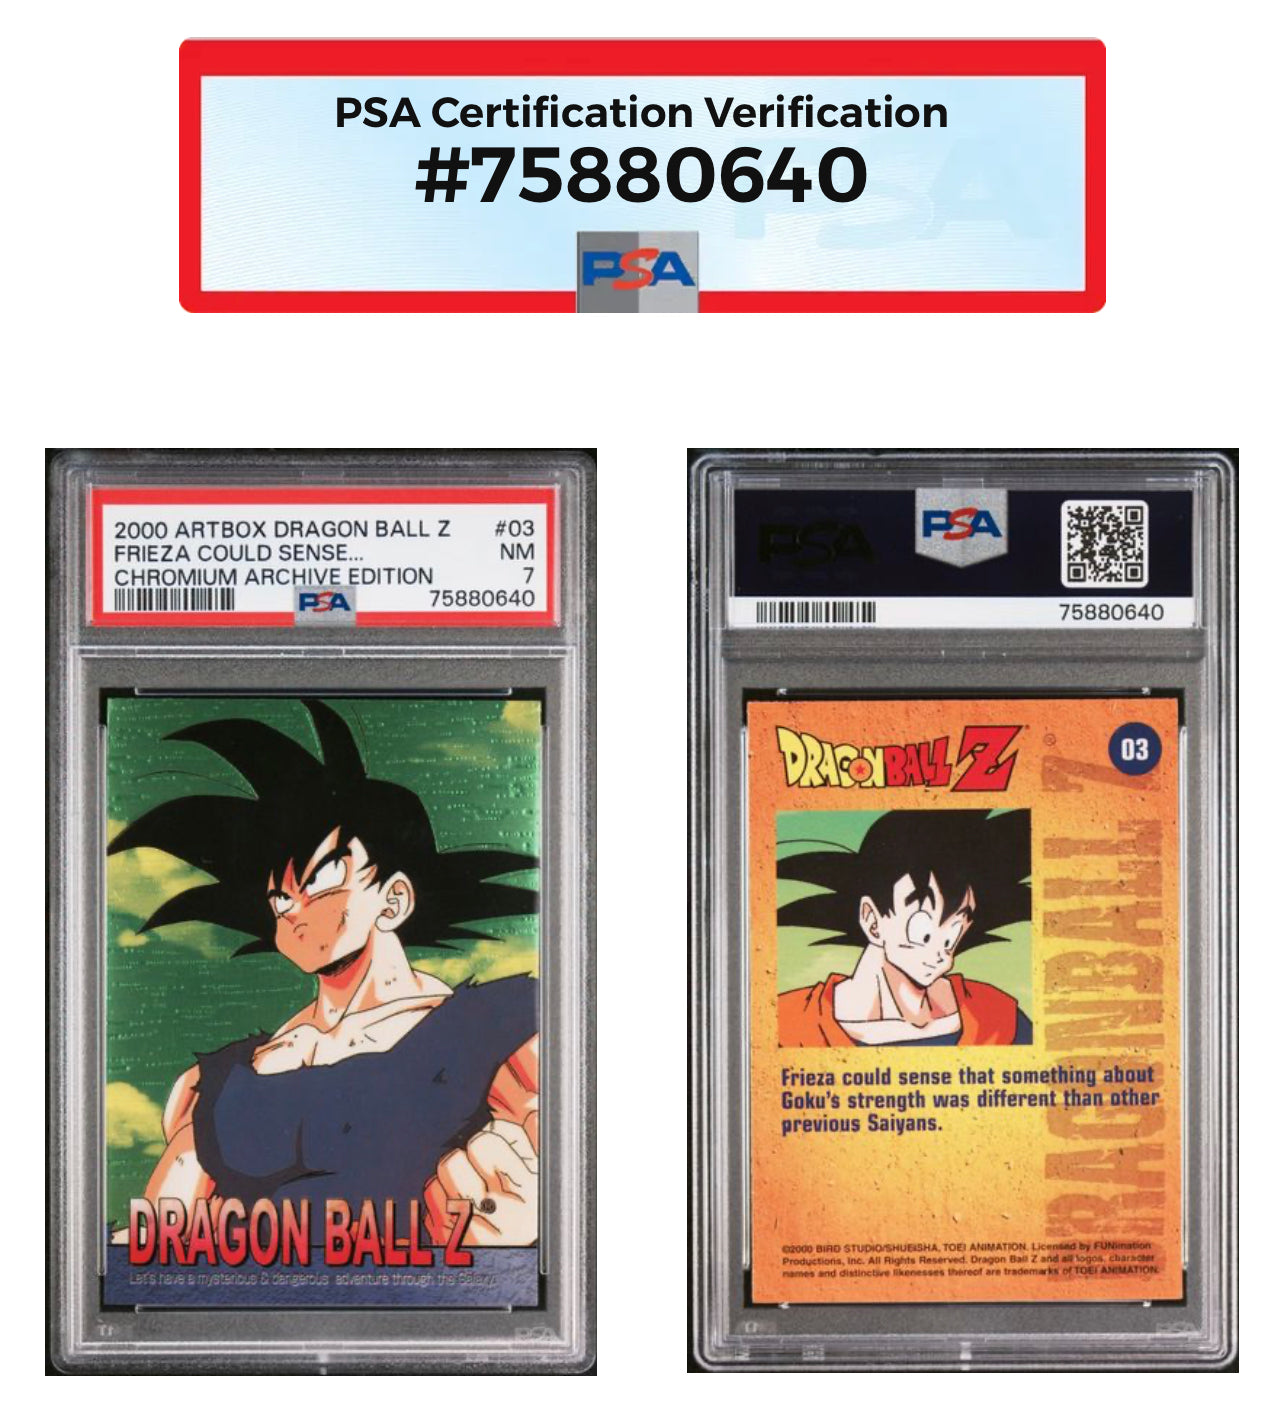 2000 Artbox Dragon Ball Z Chromium Archive Edition PSA Graded Card Lot (5)